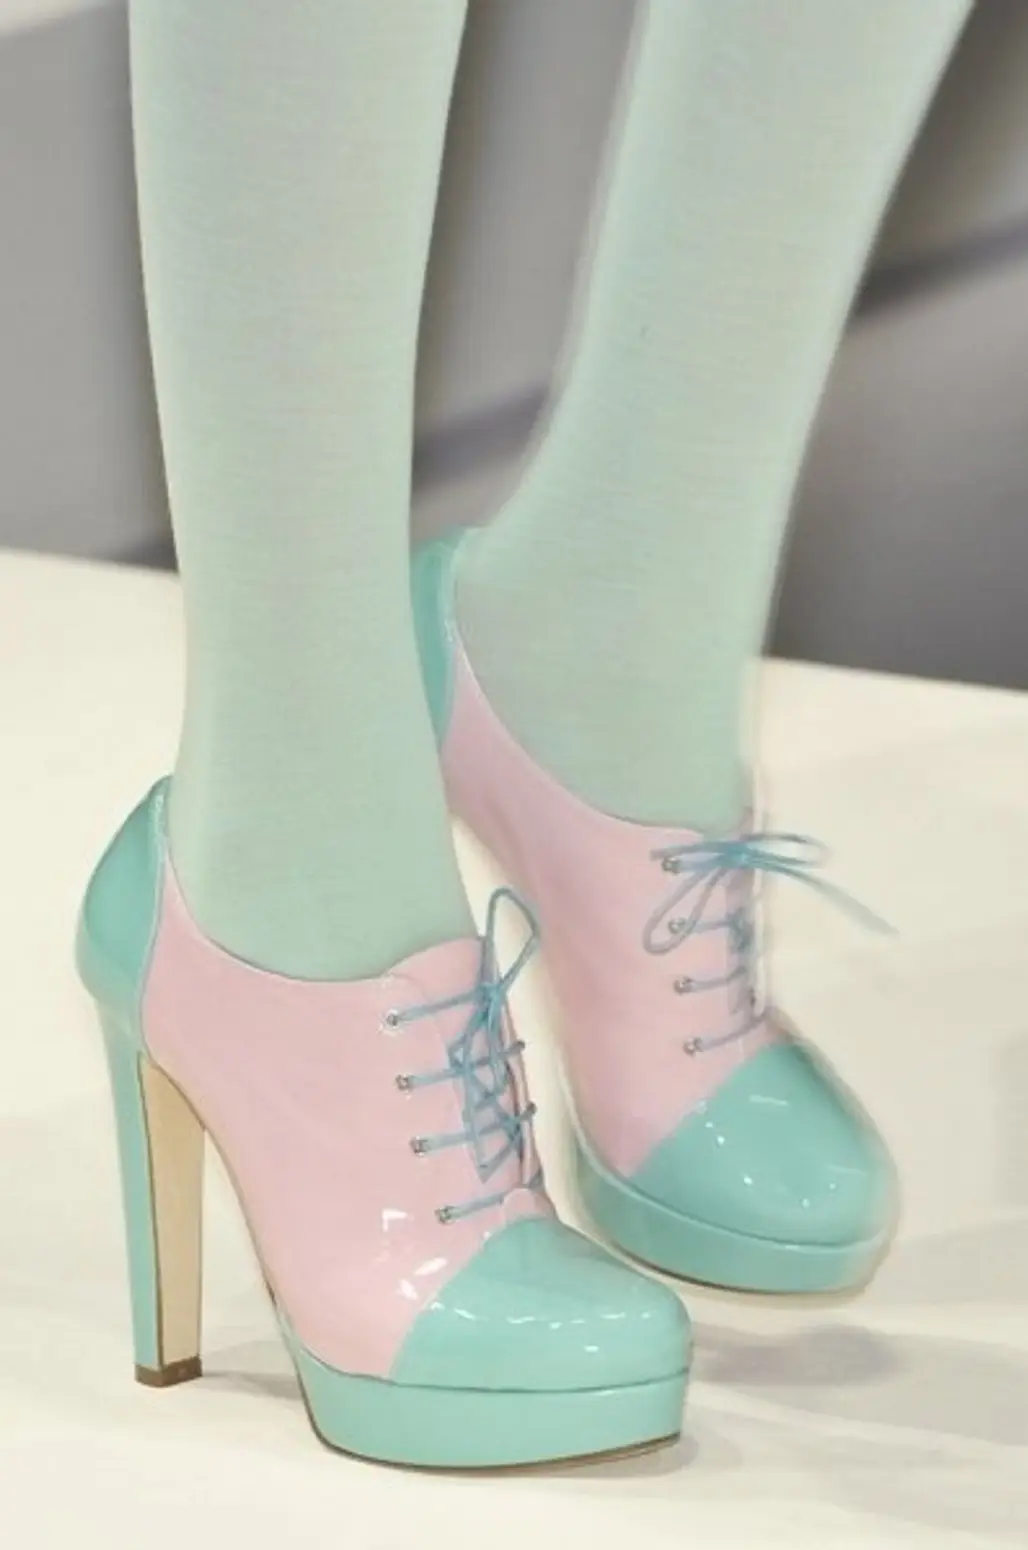 footwear,high heeled footwear,green,pink,leg,